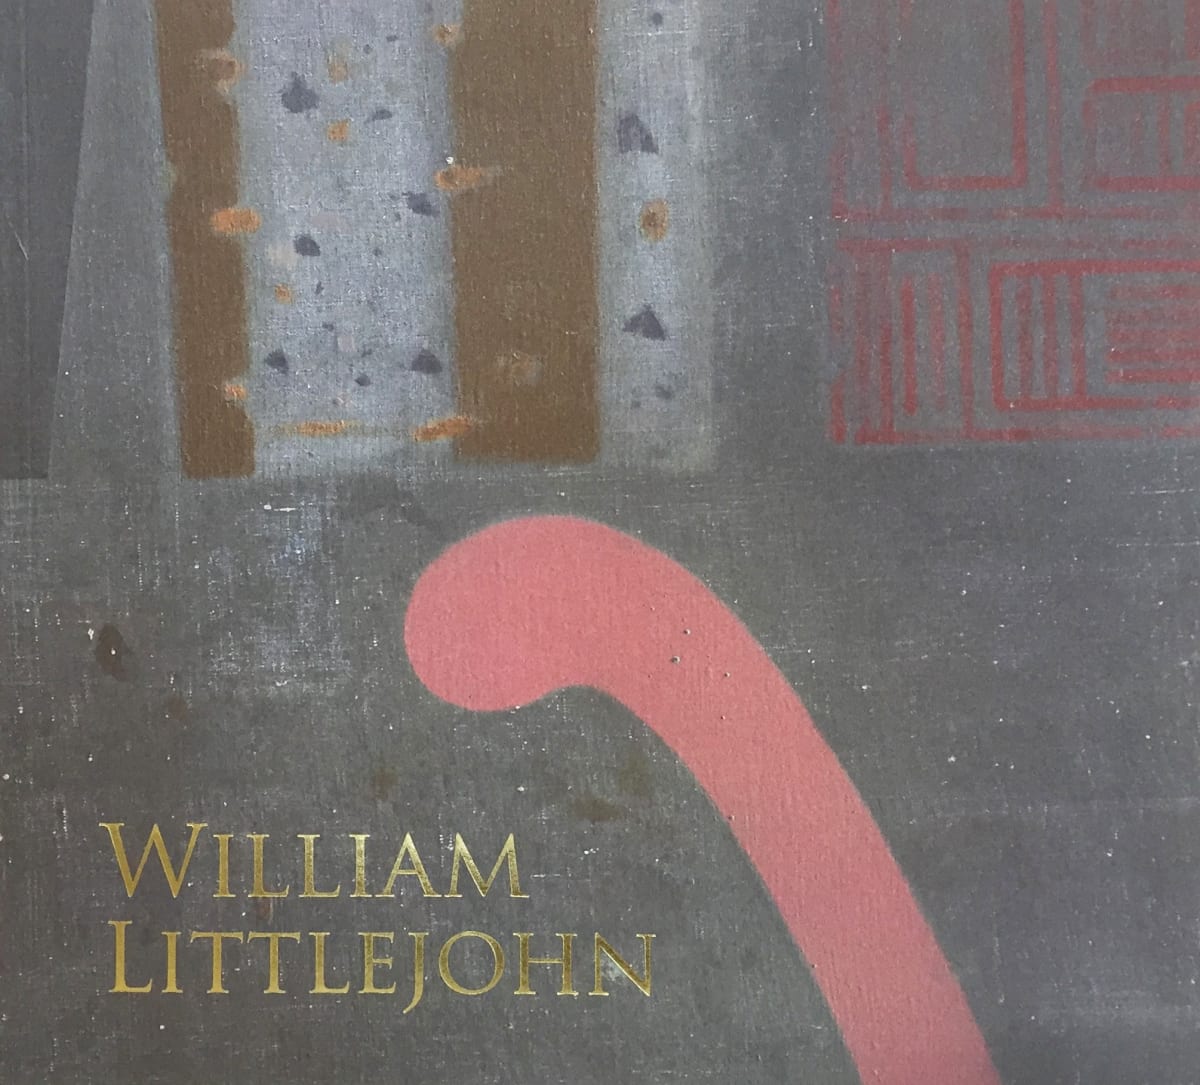 William Littlejohn